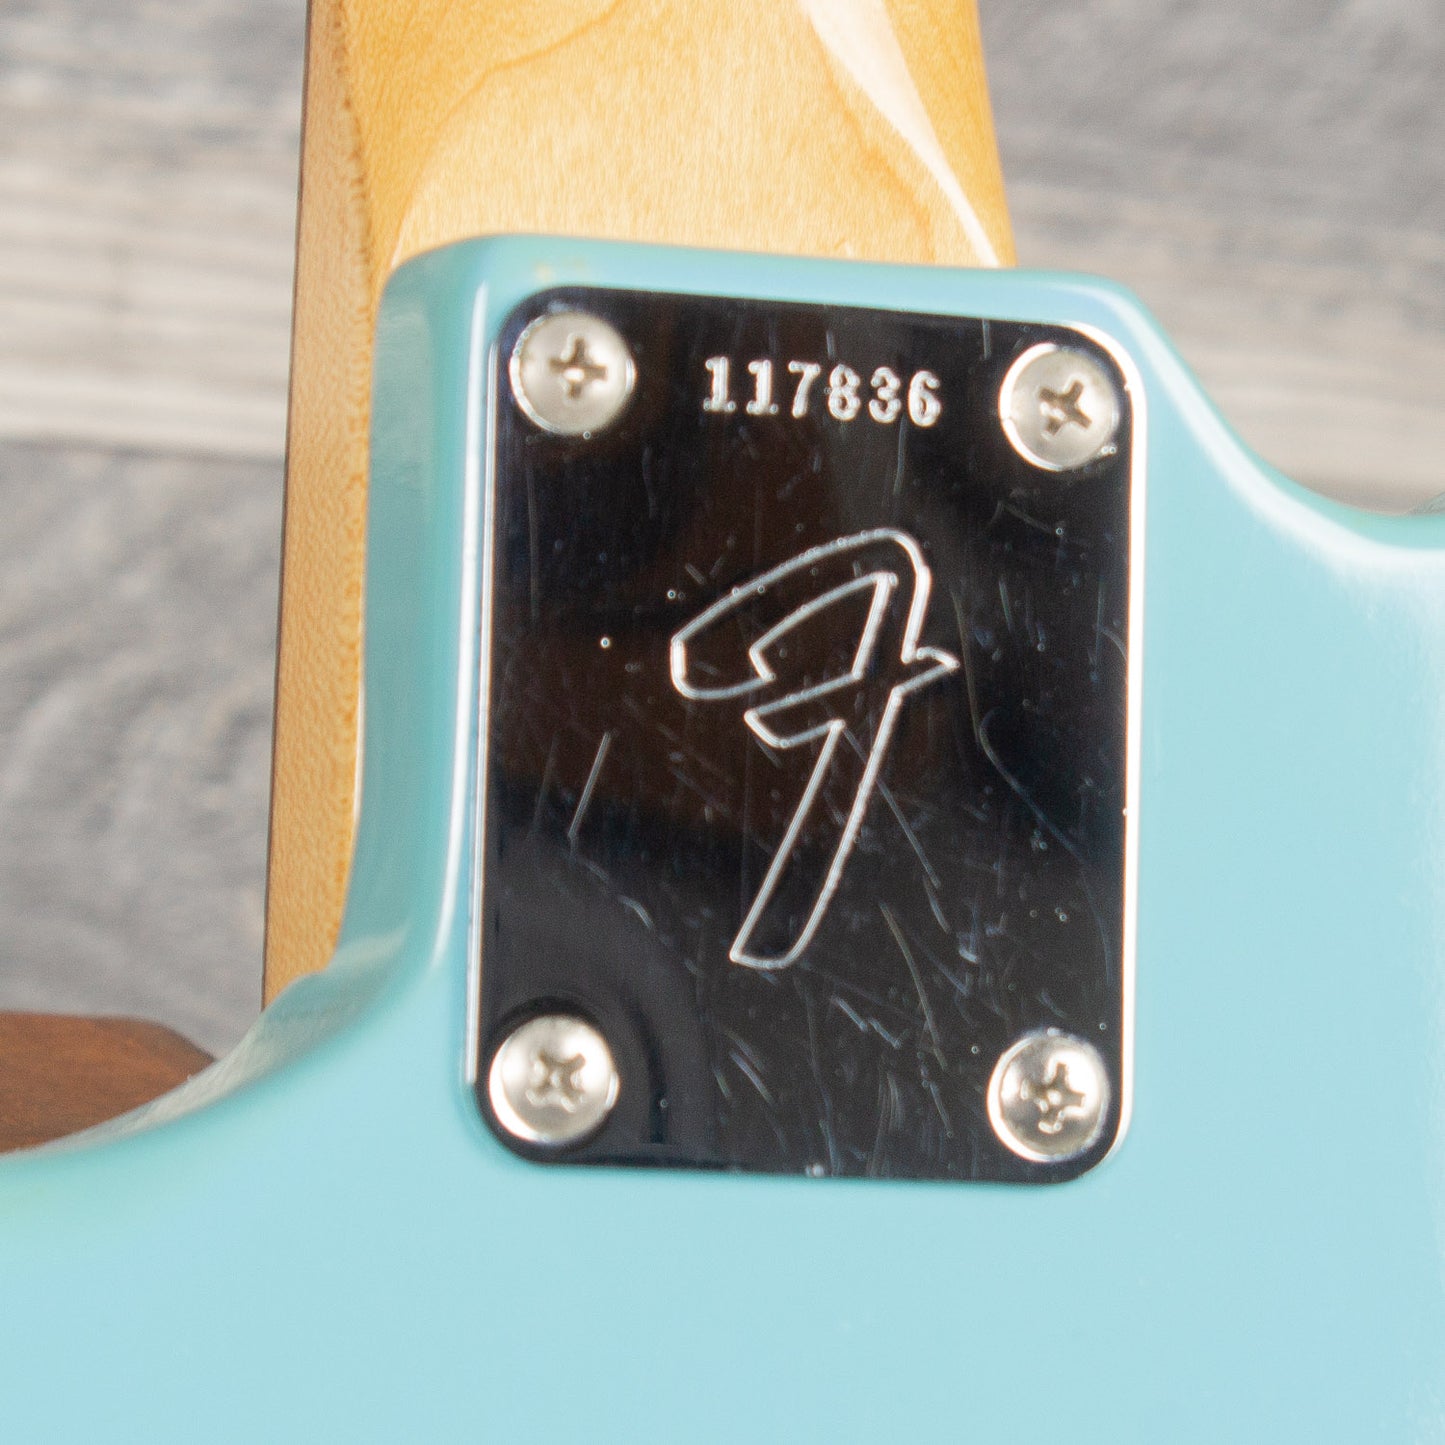 1966 Fender Mustang - Daphne Blue